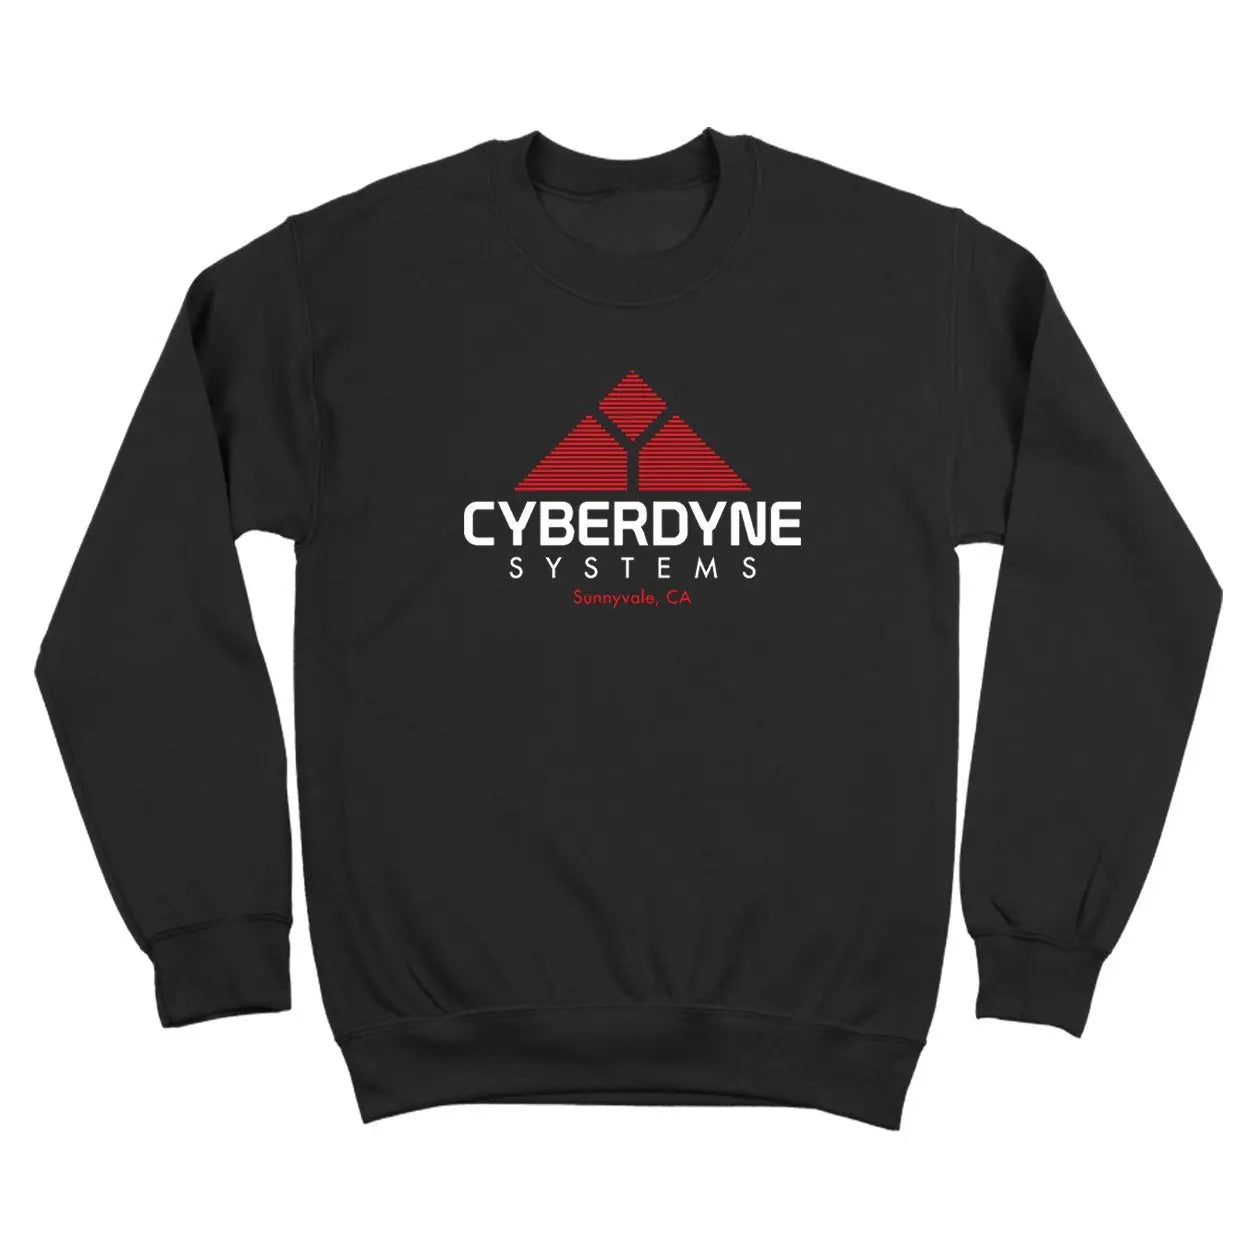 Cyberdyne Systems Sunnyvale Tshirt - Donkey Tees